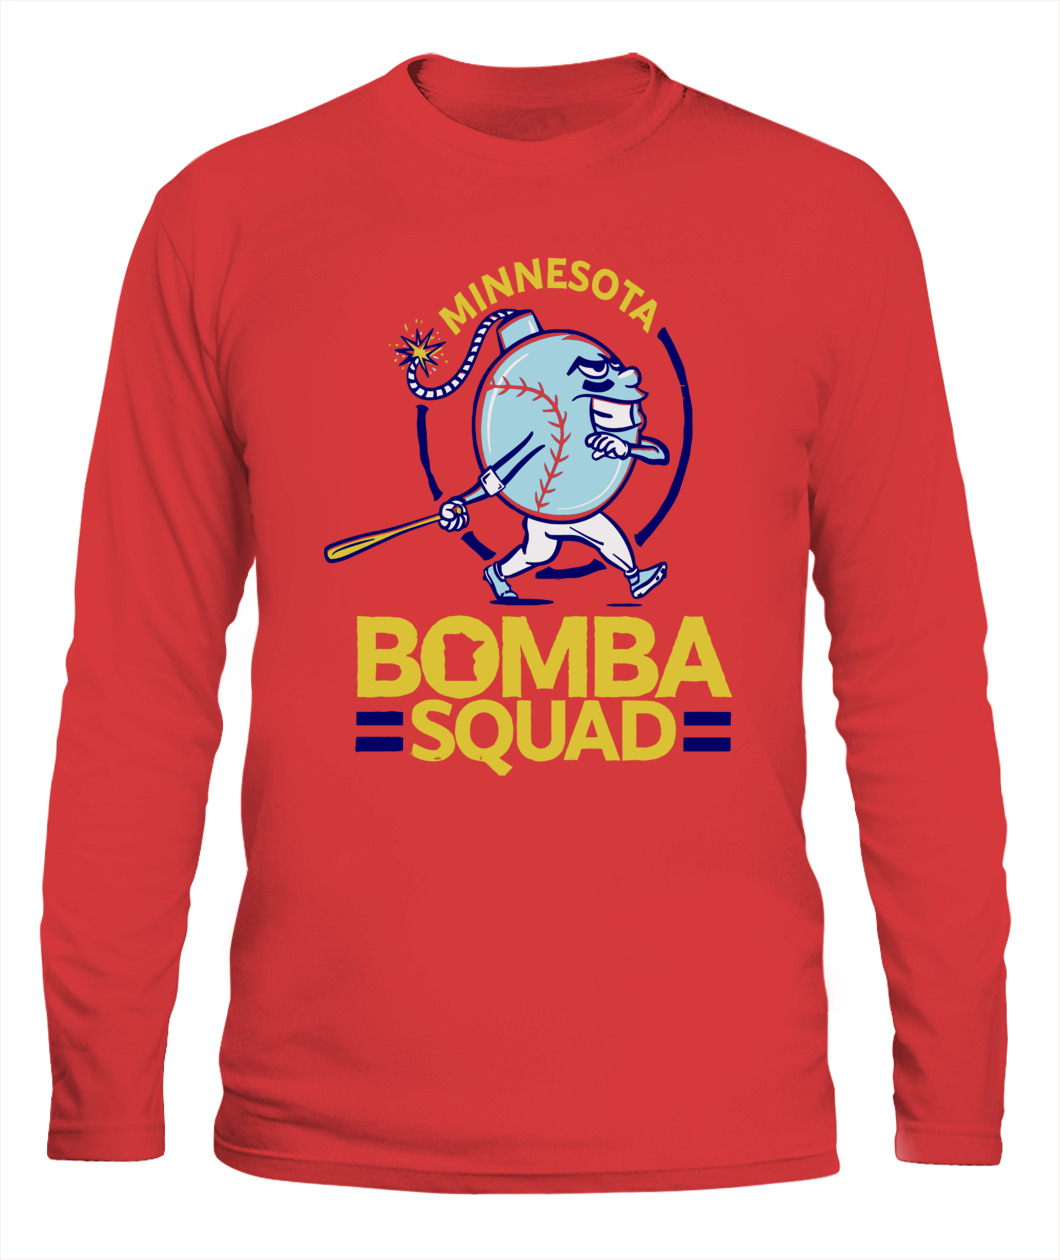 bomba squad t shirt